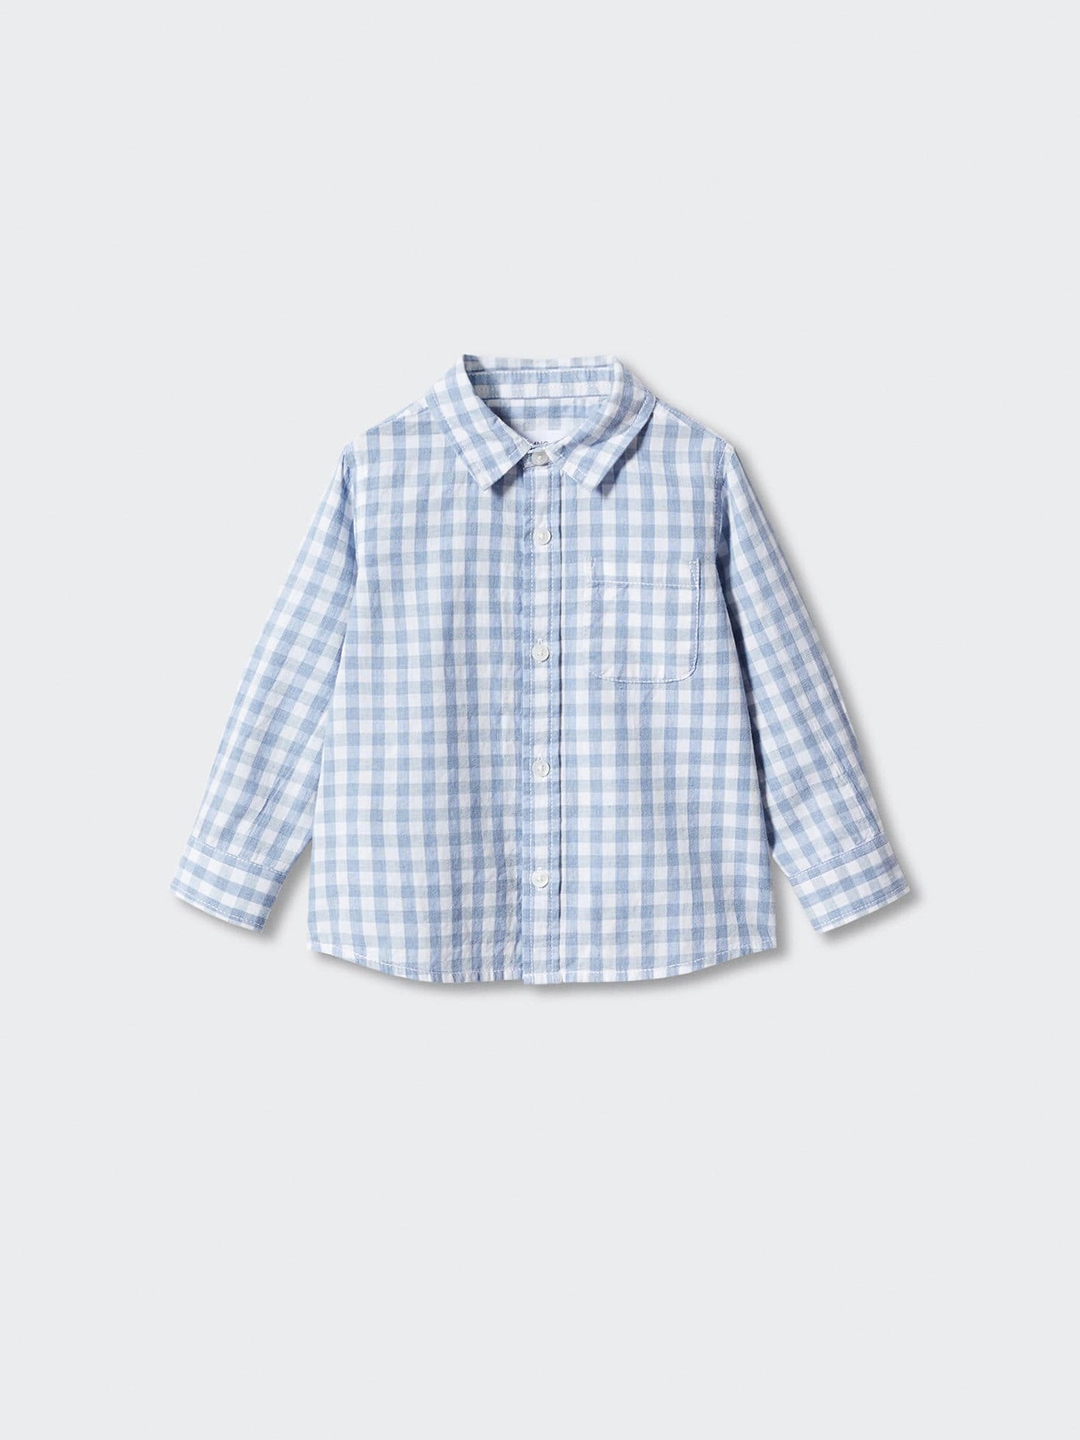 

Mango Kids Boys Gingham Checked Pure Cotton Regular Fit Casual Shirt, Blue